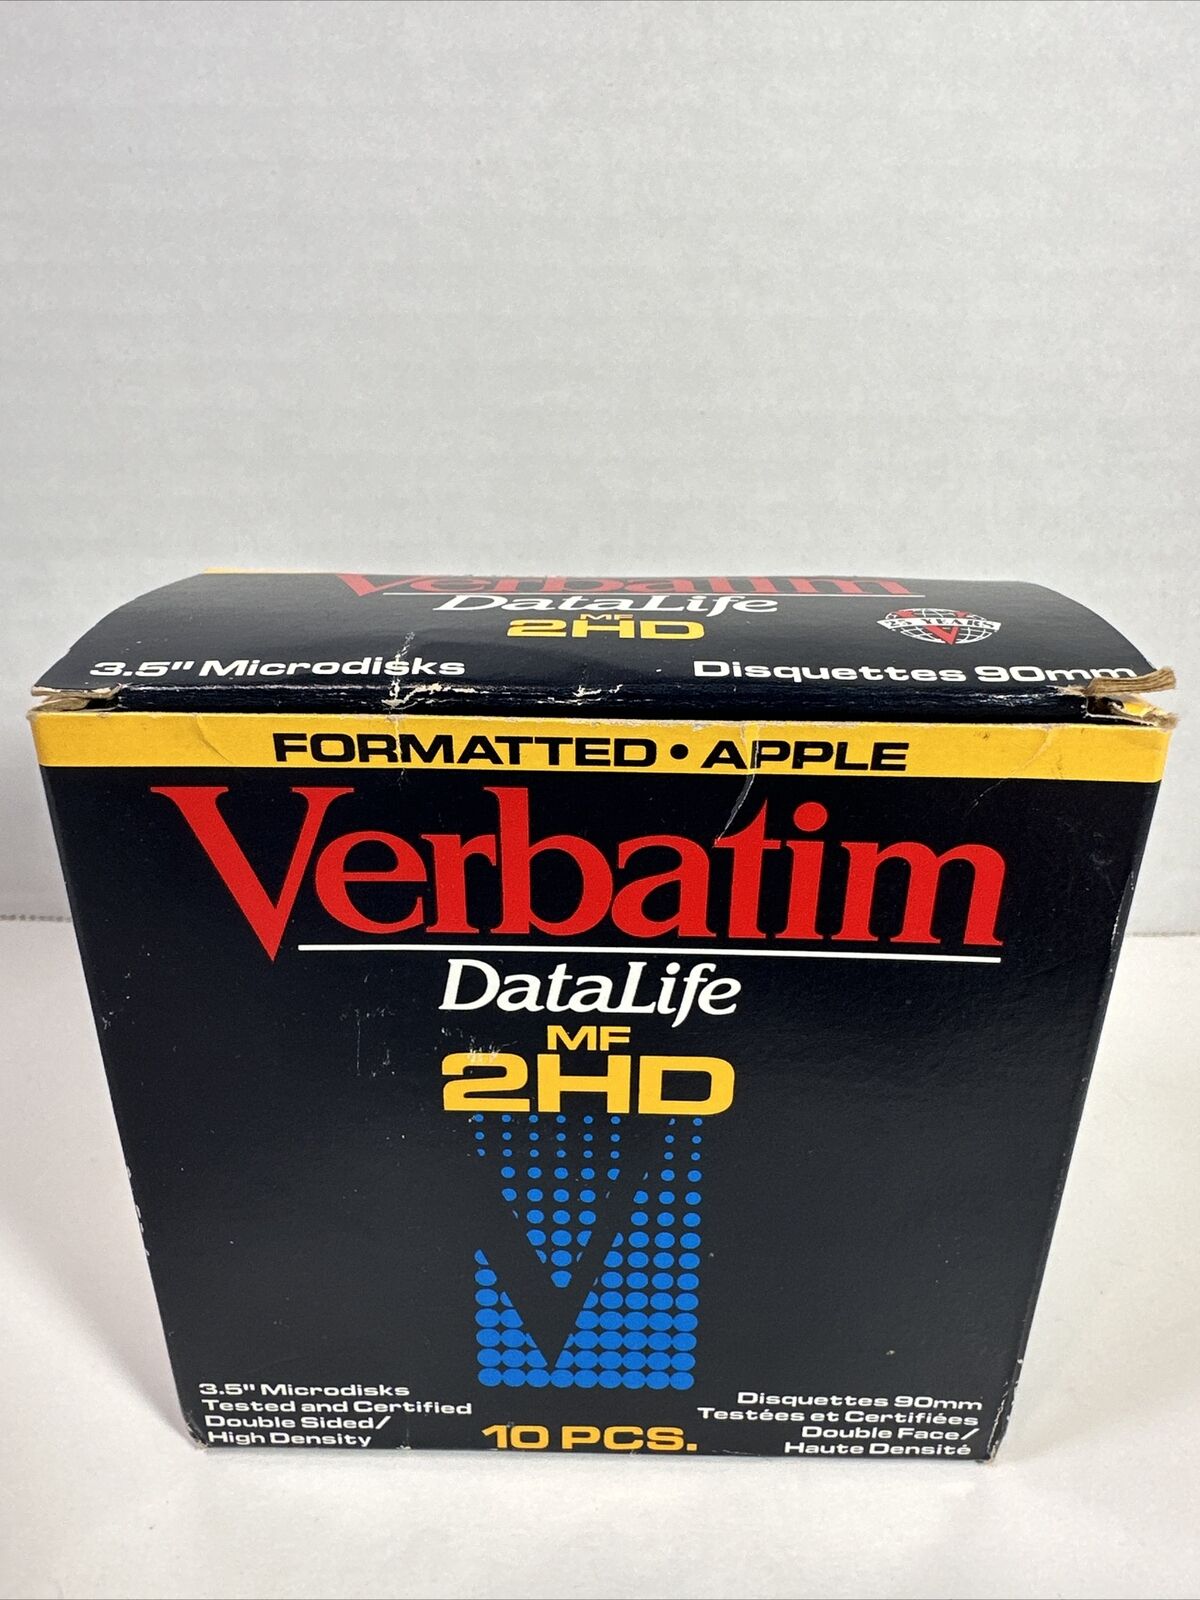 Verbatim Datalife MF 2HD Pack of 10 3.5” Micro disks  Formatted For Apple NIB